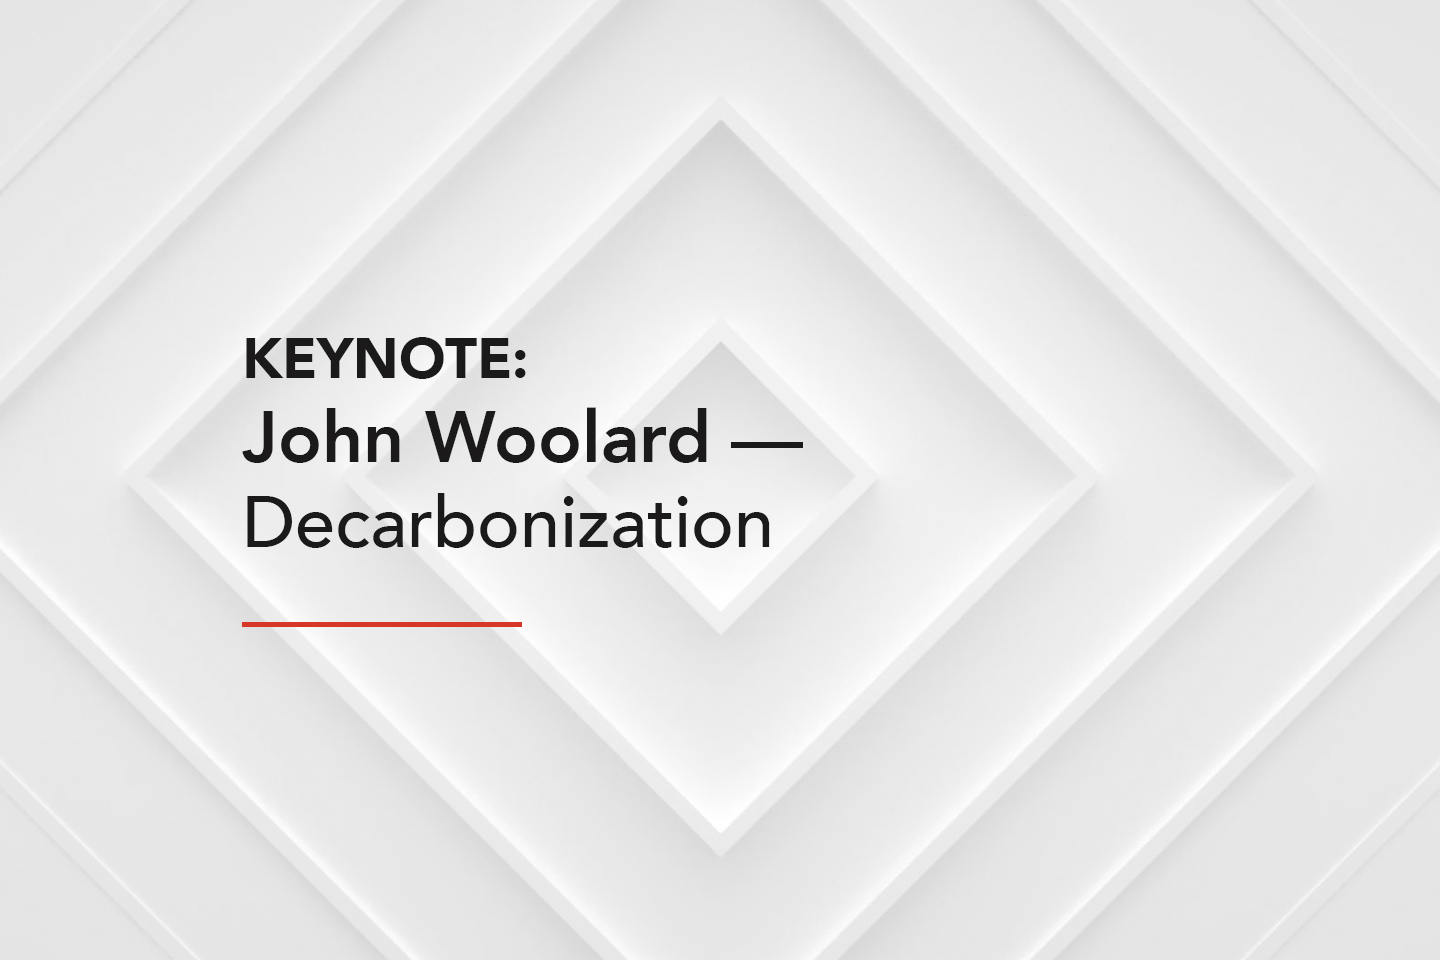 Keynote CEO Woolard